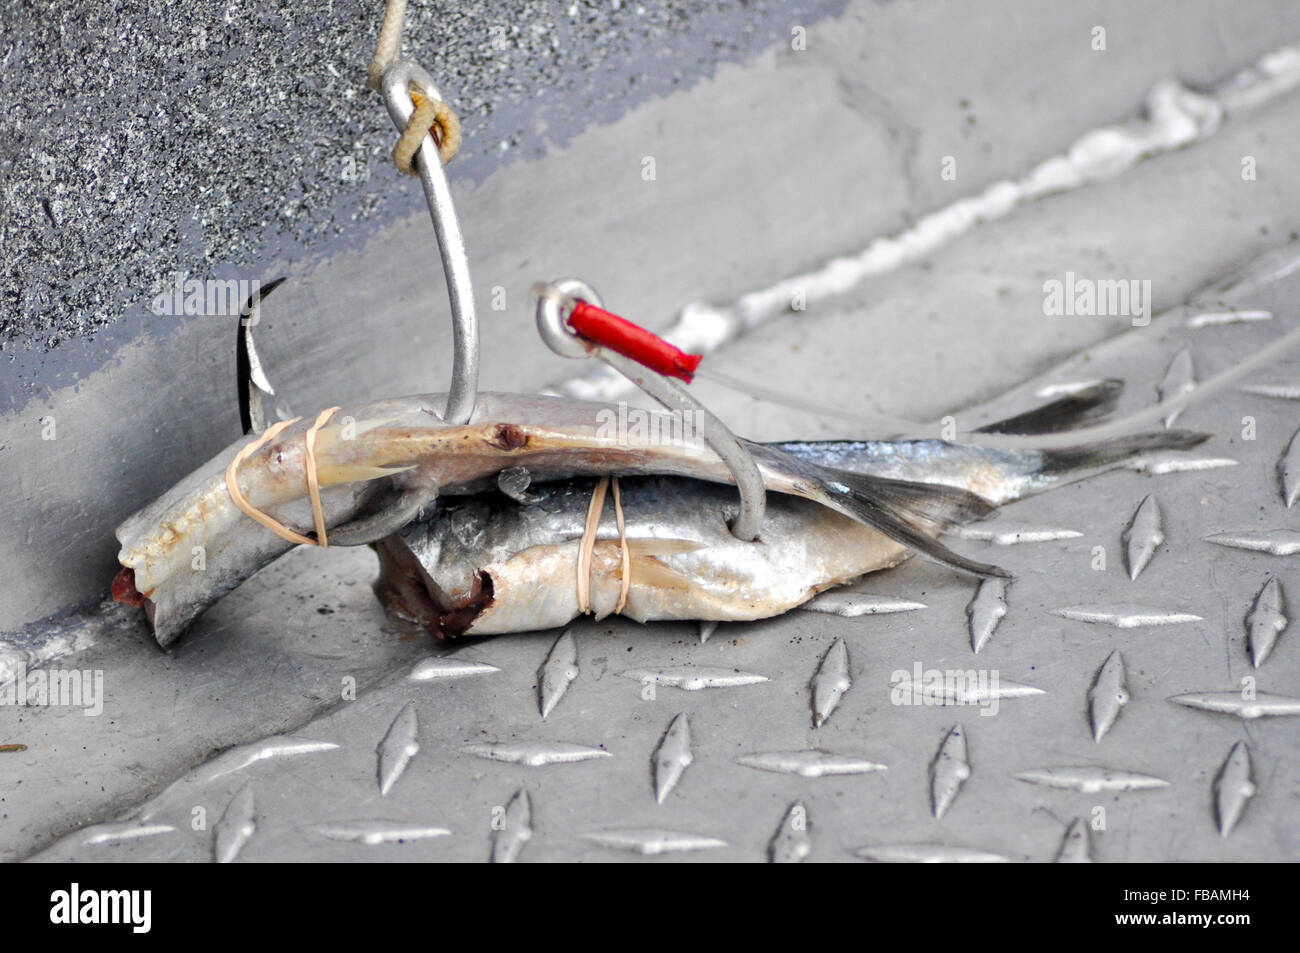 Herring bait on large fish hooks for halibut fishing on commercial